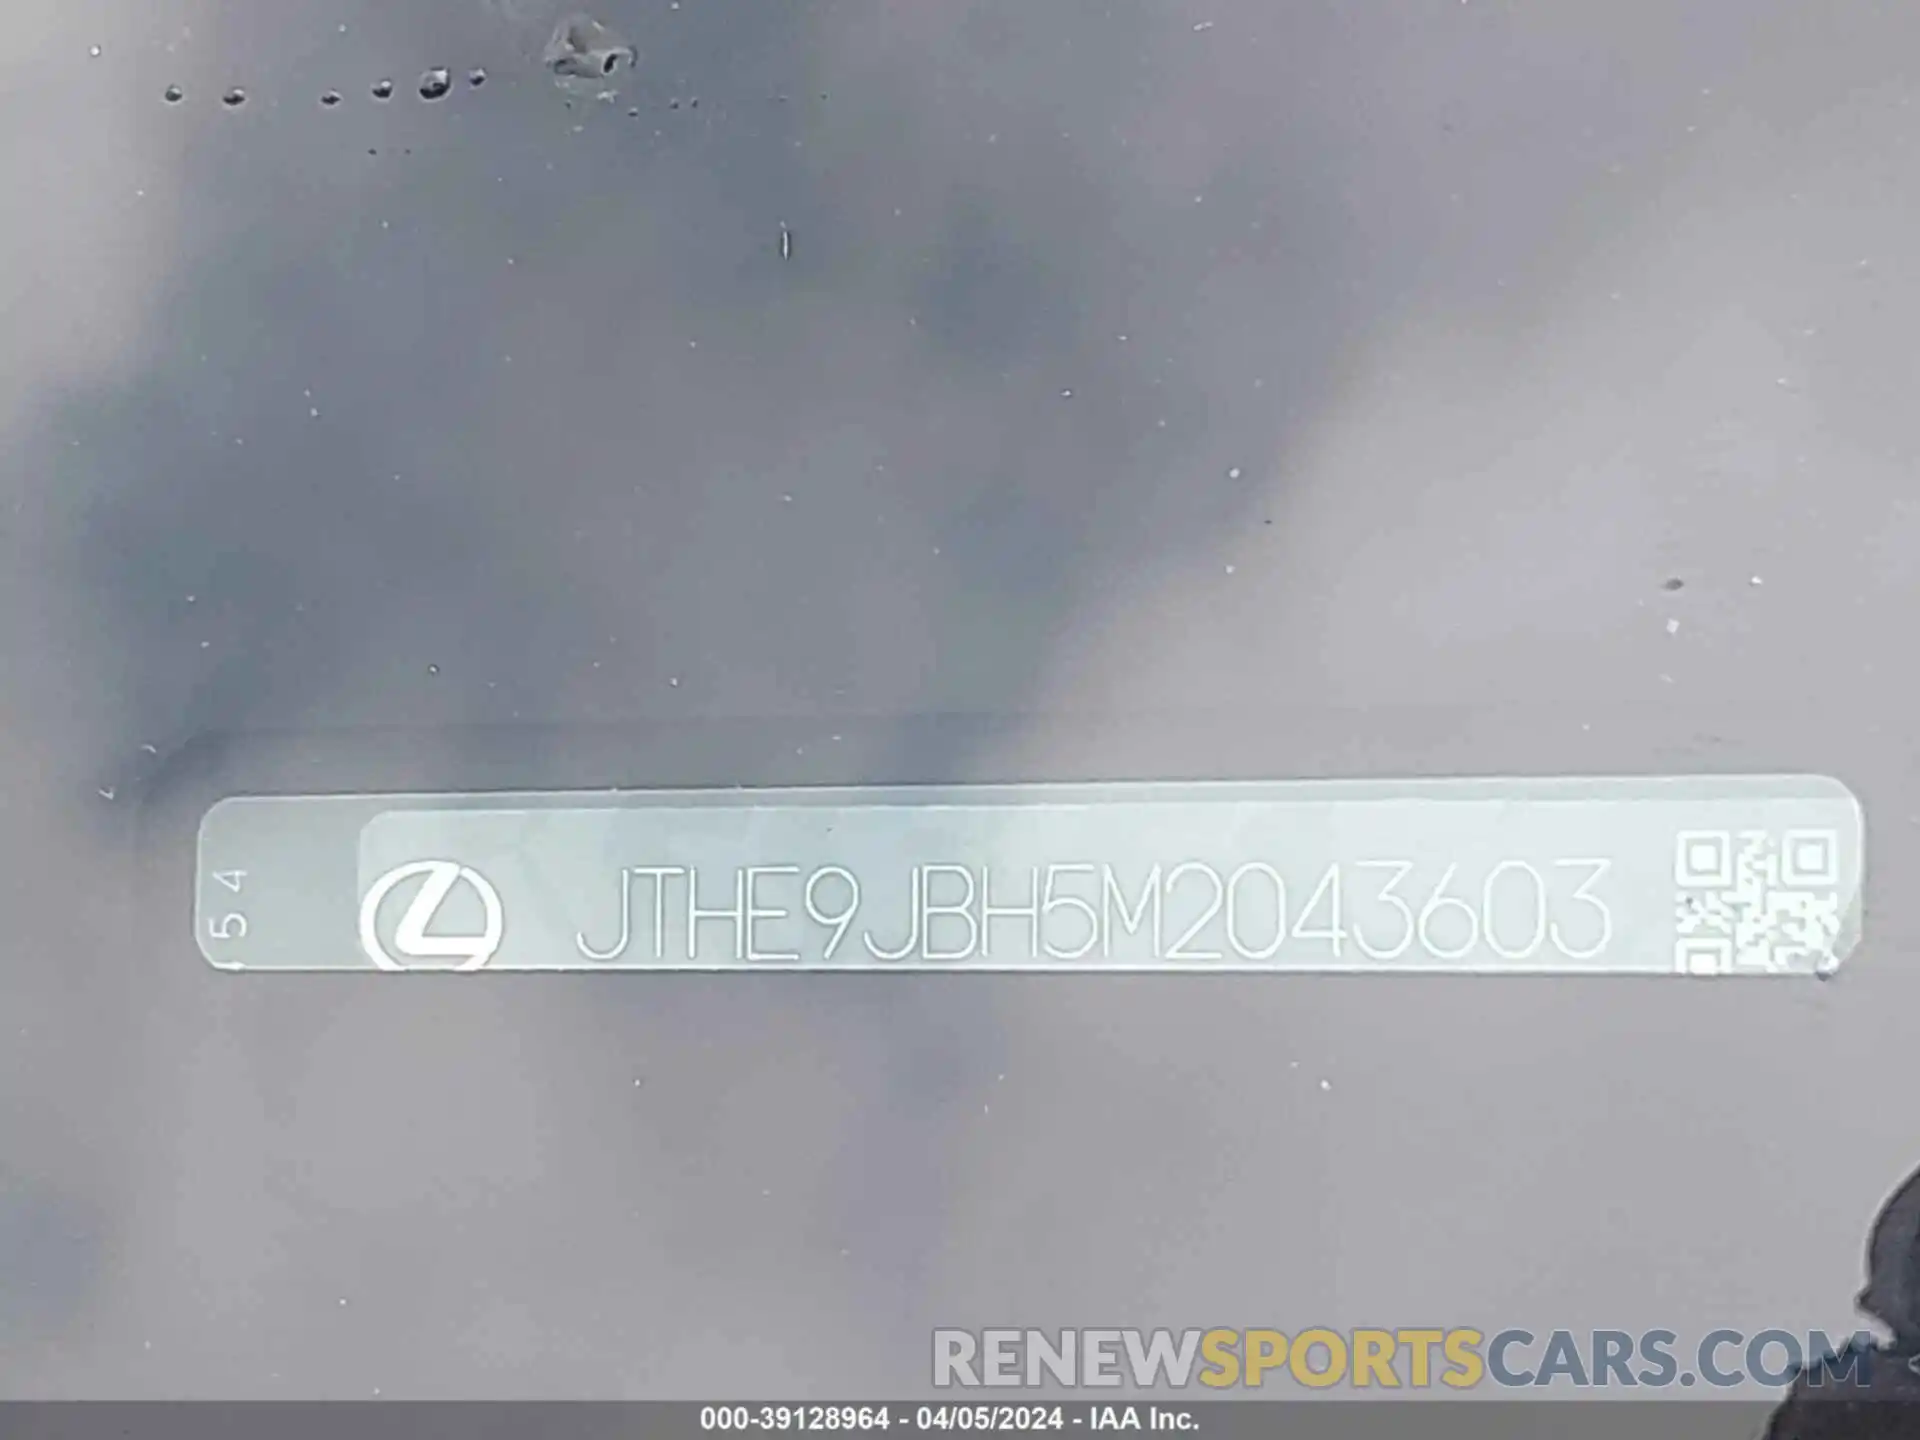 9 Photograph of a damaged car JTHE9JBH5M2043603 LEXUS UX 250H 2021